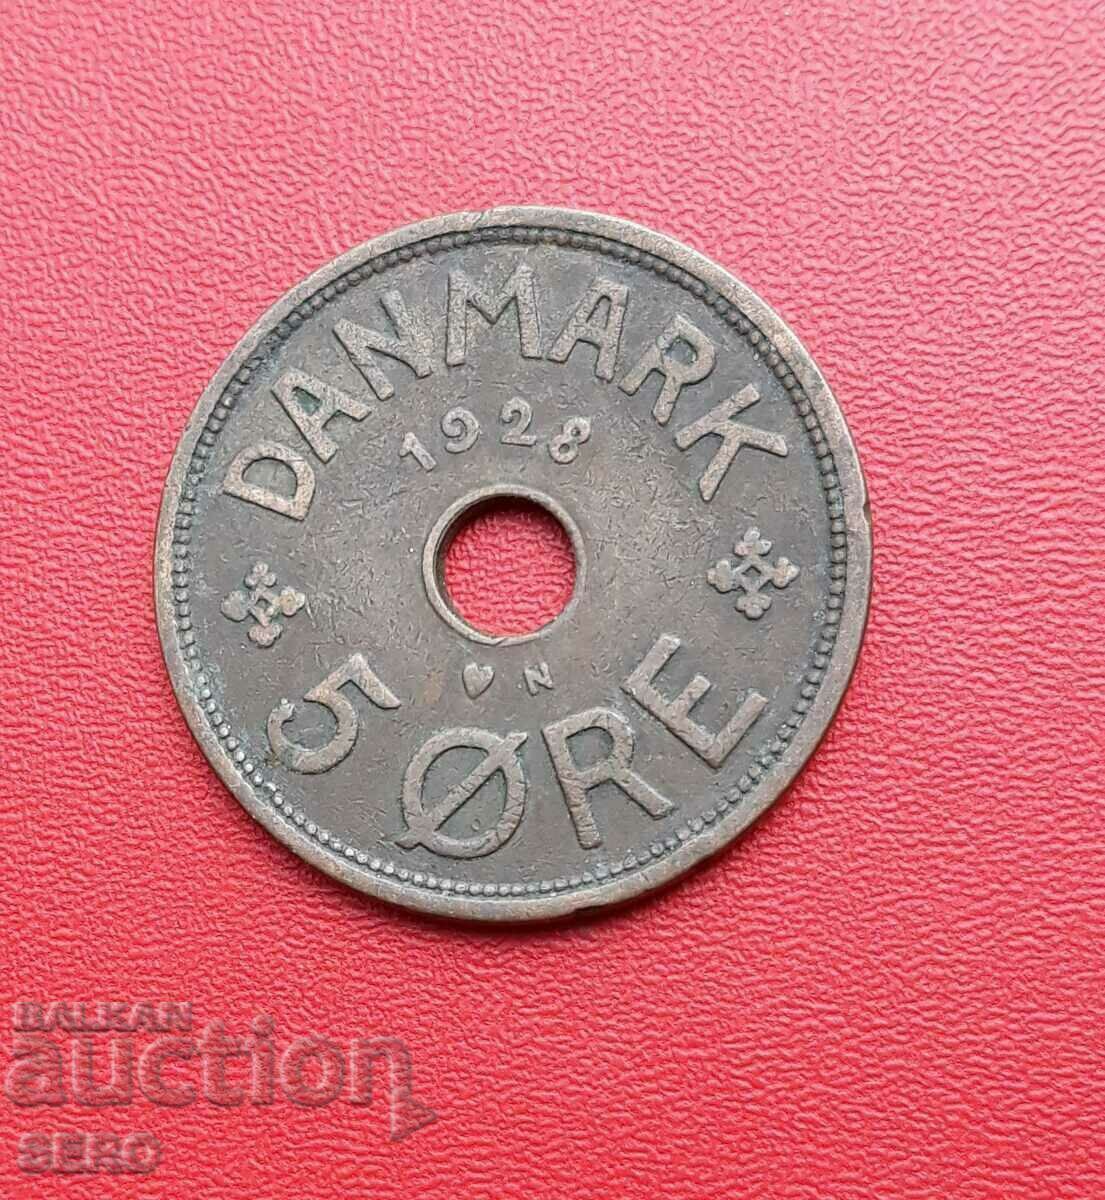 Denmark-5 yore 1928